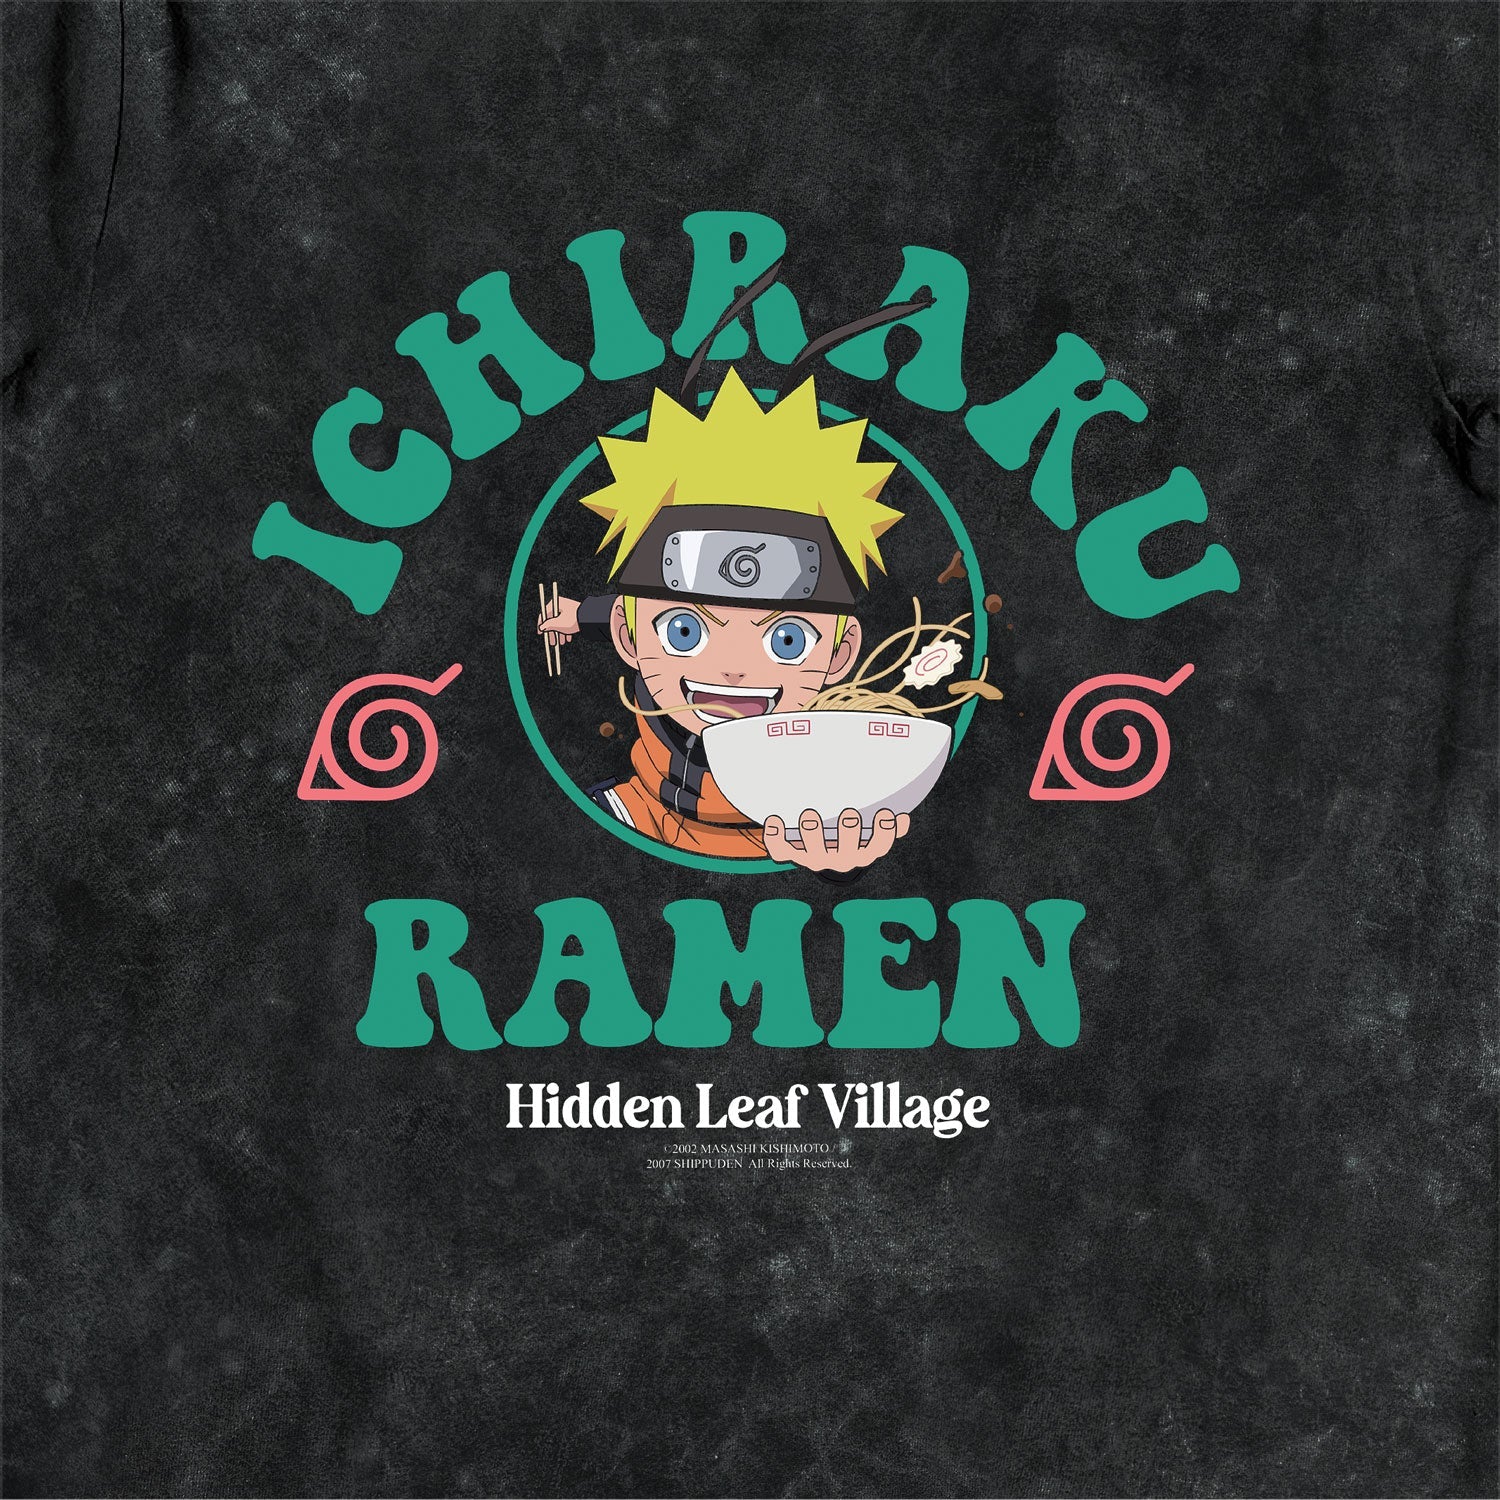 Naruto Ramen Leaf Village Black Snow Wash Kids T-Shirt